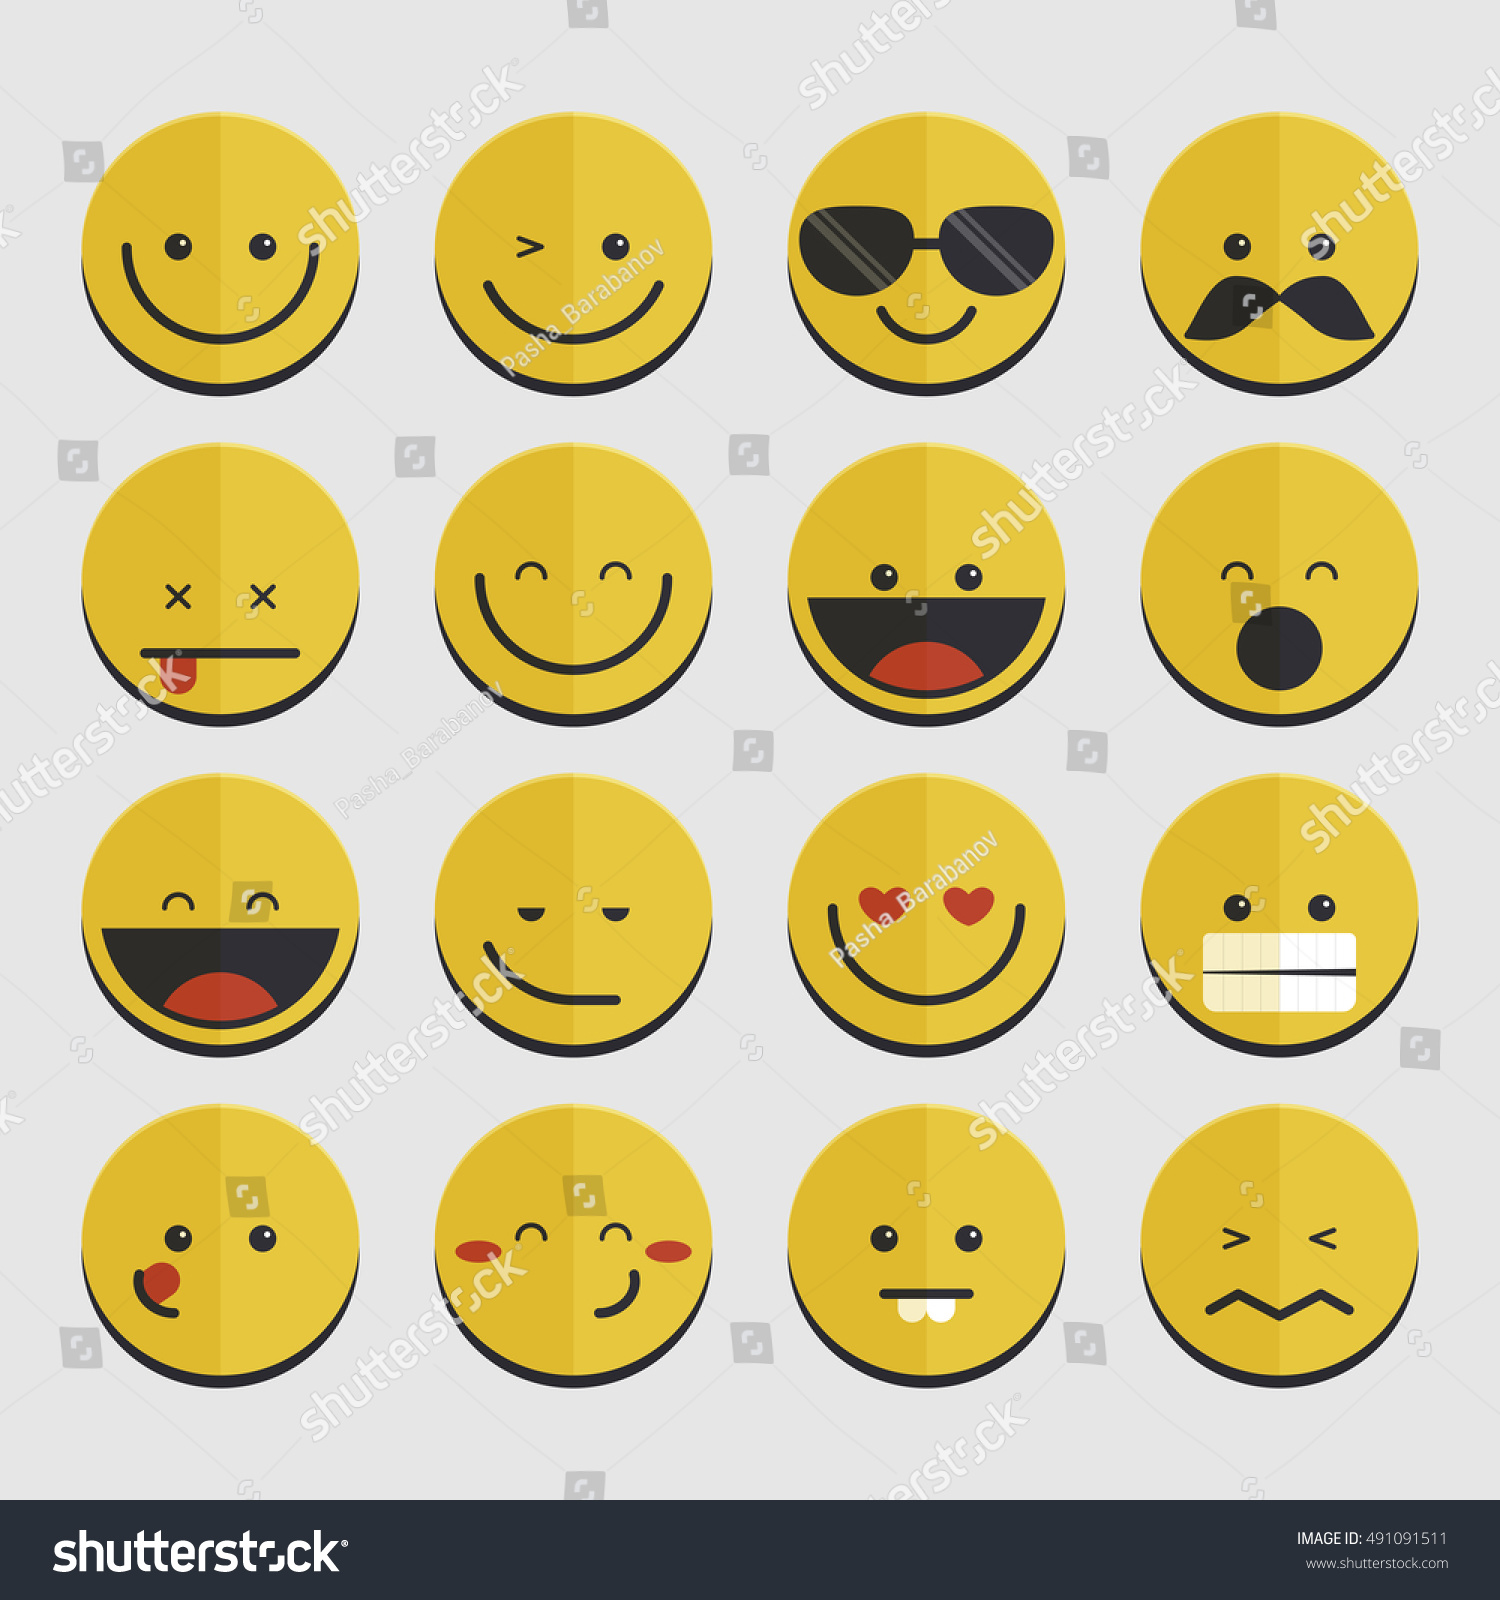 Set Of Emoticons, Emoji Isolated, Vector Illustration. - 491091511 ...